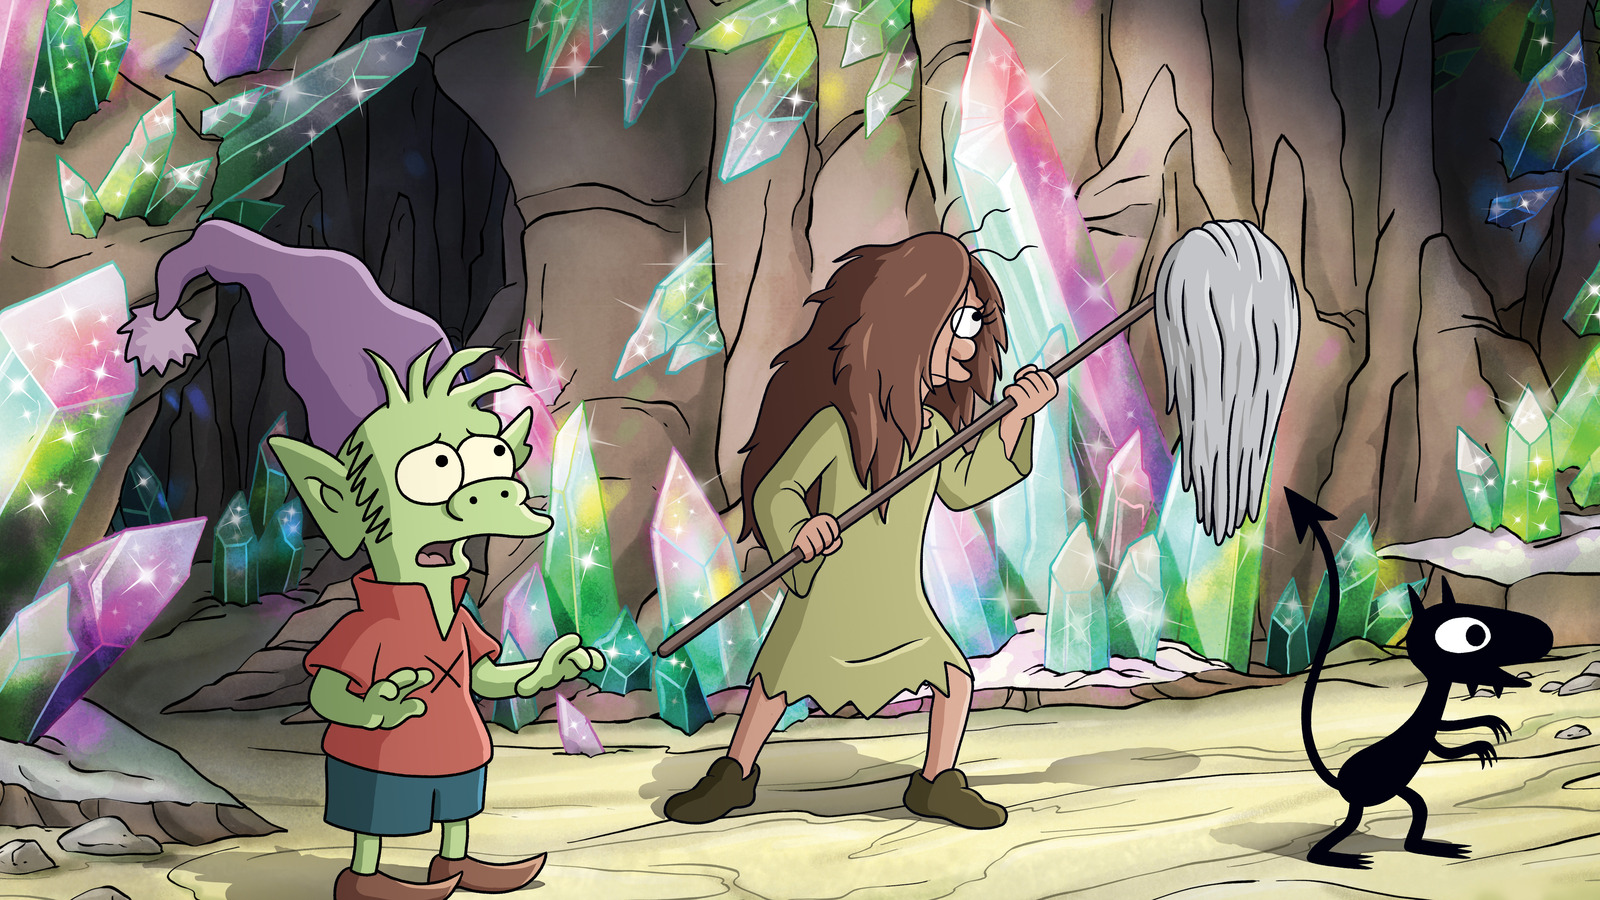 Disenchantment Season 5 Trailer: Matt Groening's Animated Fantasy Comedy On Netflix Is Ending